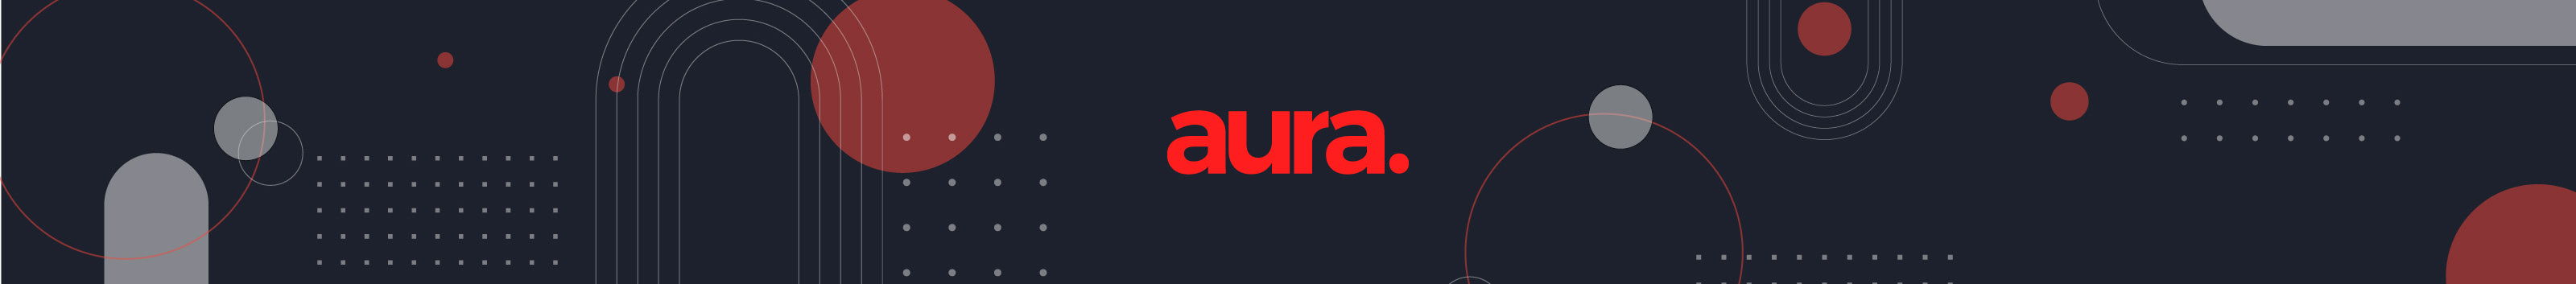 Aura Creativa's profile banner